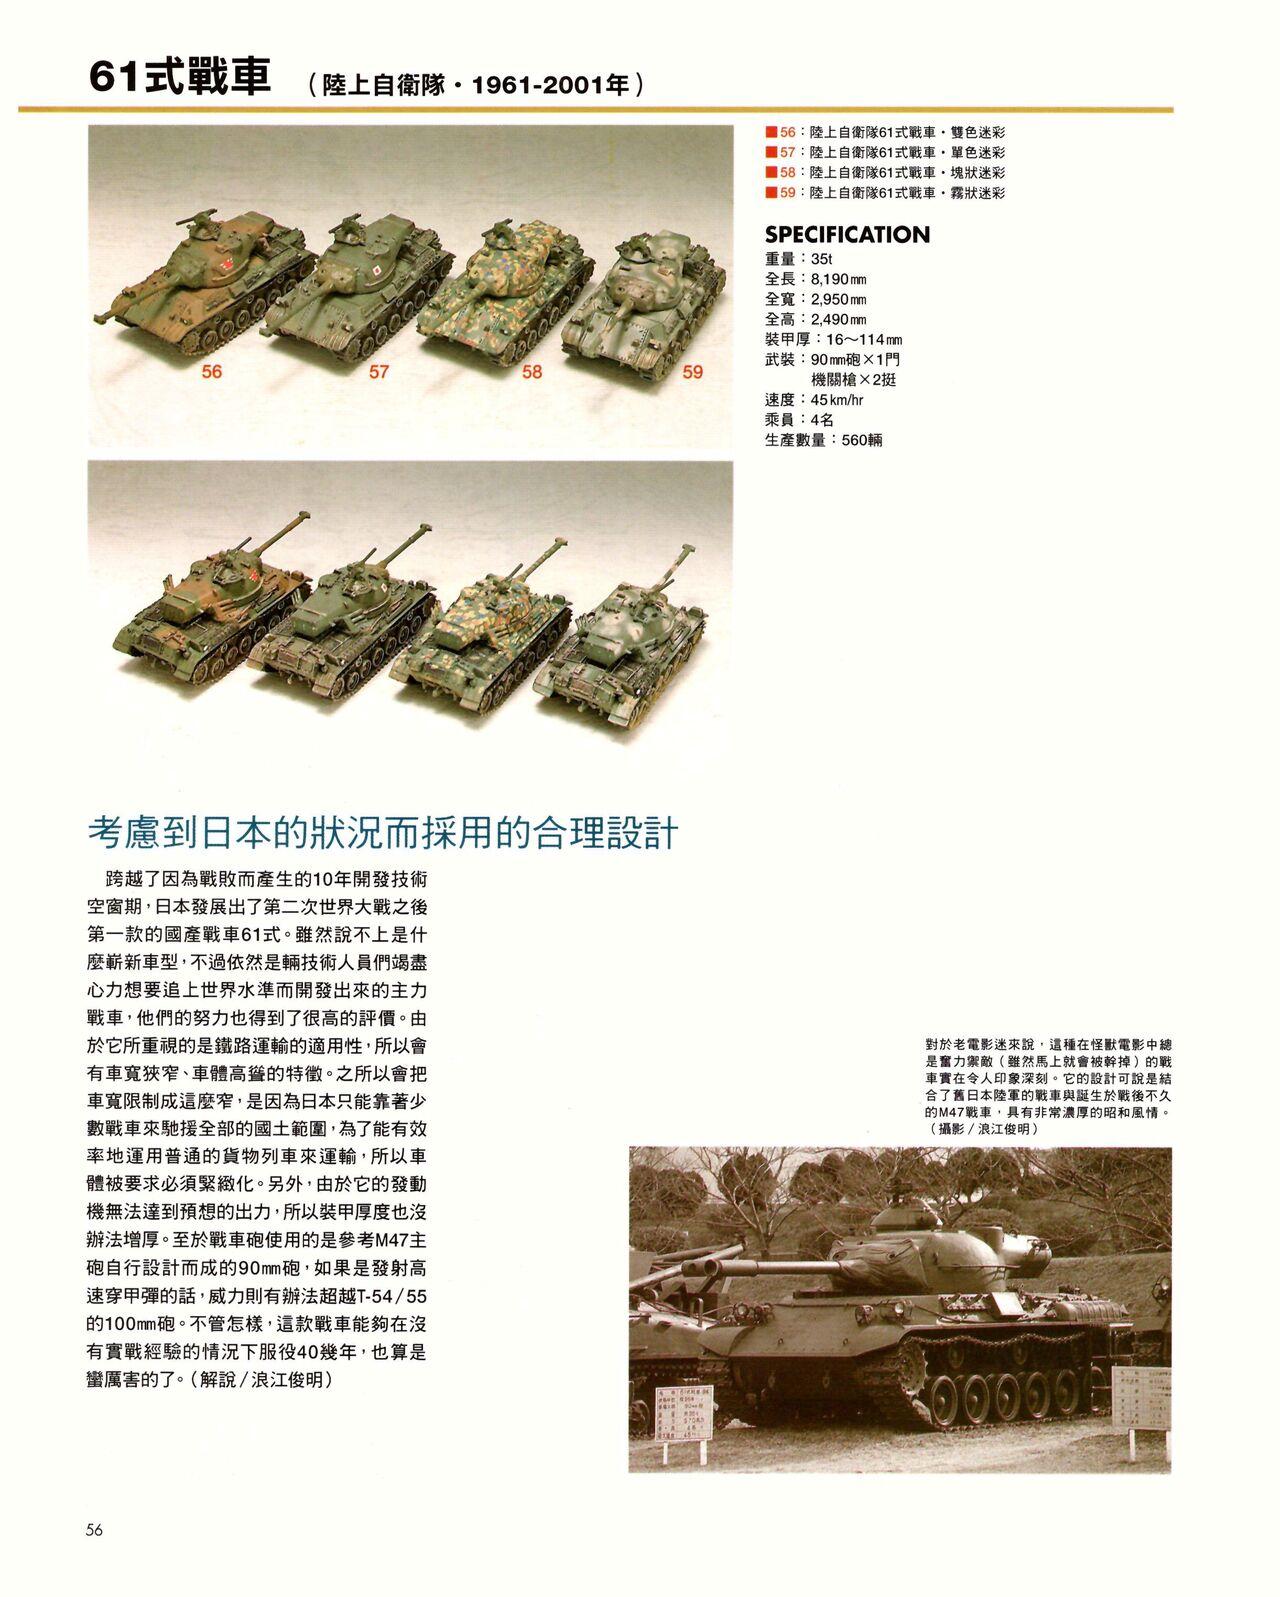 世界戰車博物館圖鑑(2009台版)  PANZERTALES WORLD TANK MUSEUM illustrated (chinese) 55